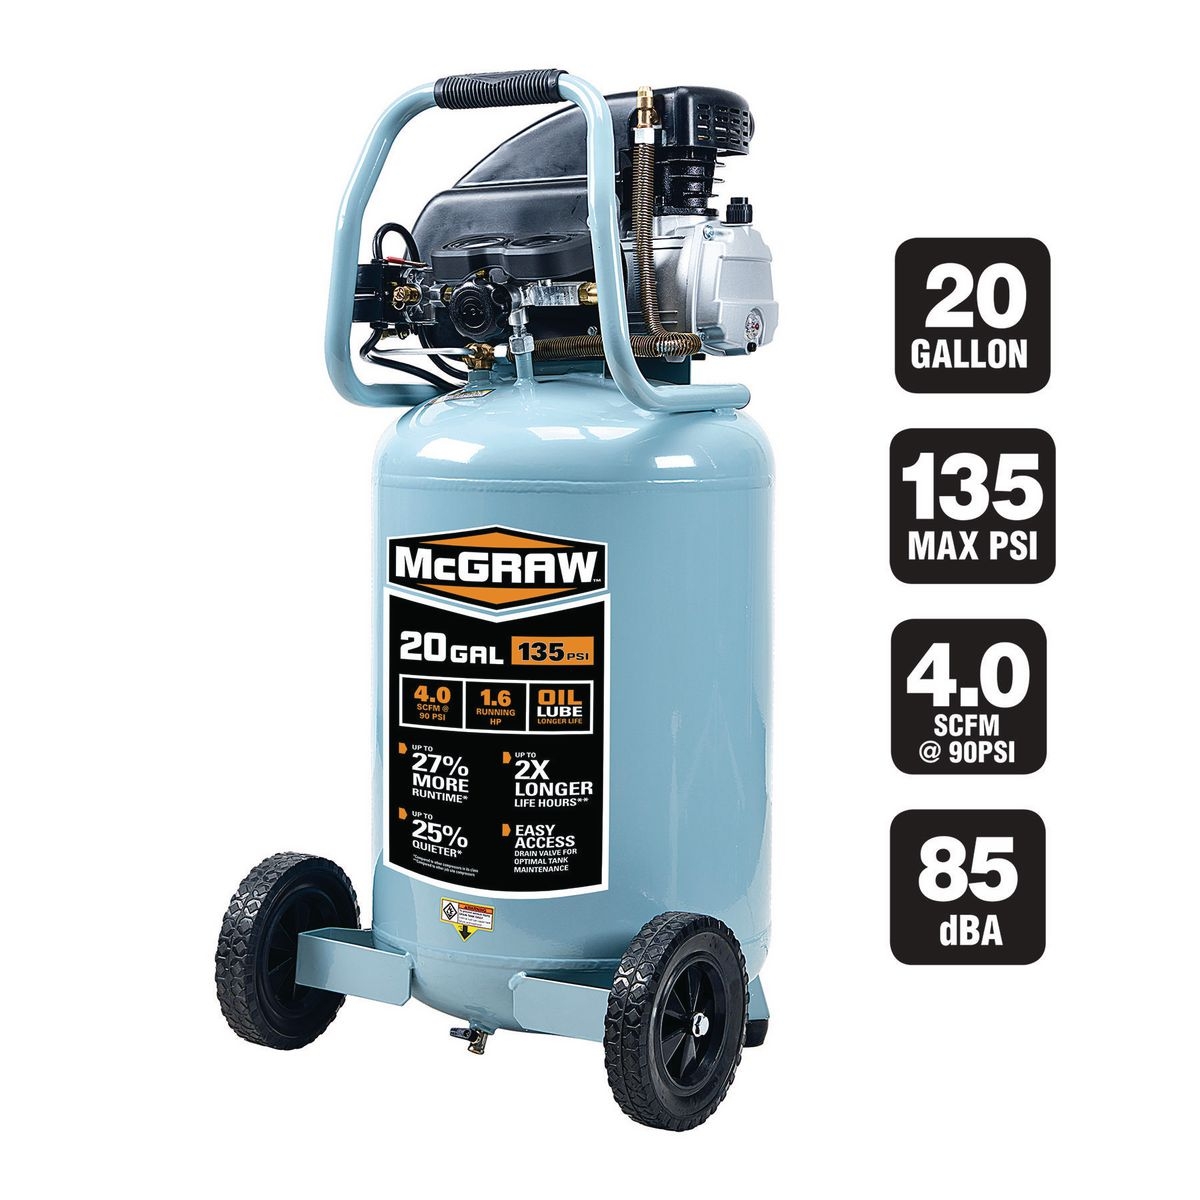 MCGRAW 20 gallon 1.6 HP 135 PSI Oil Lube Vertical Air Compressor – Item